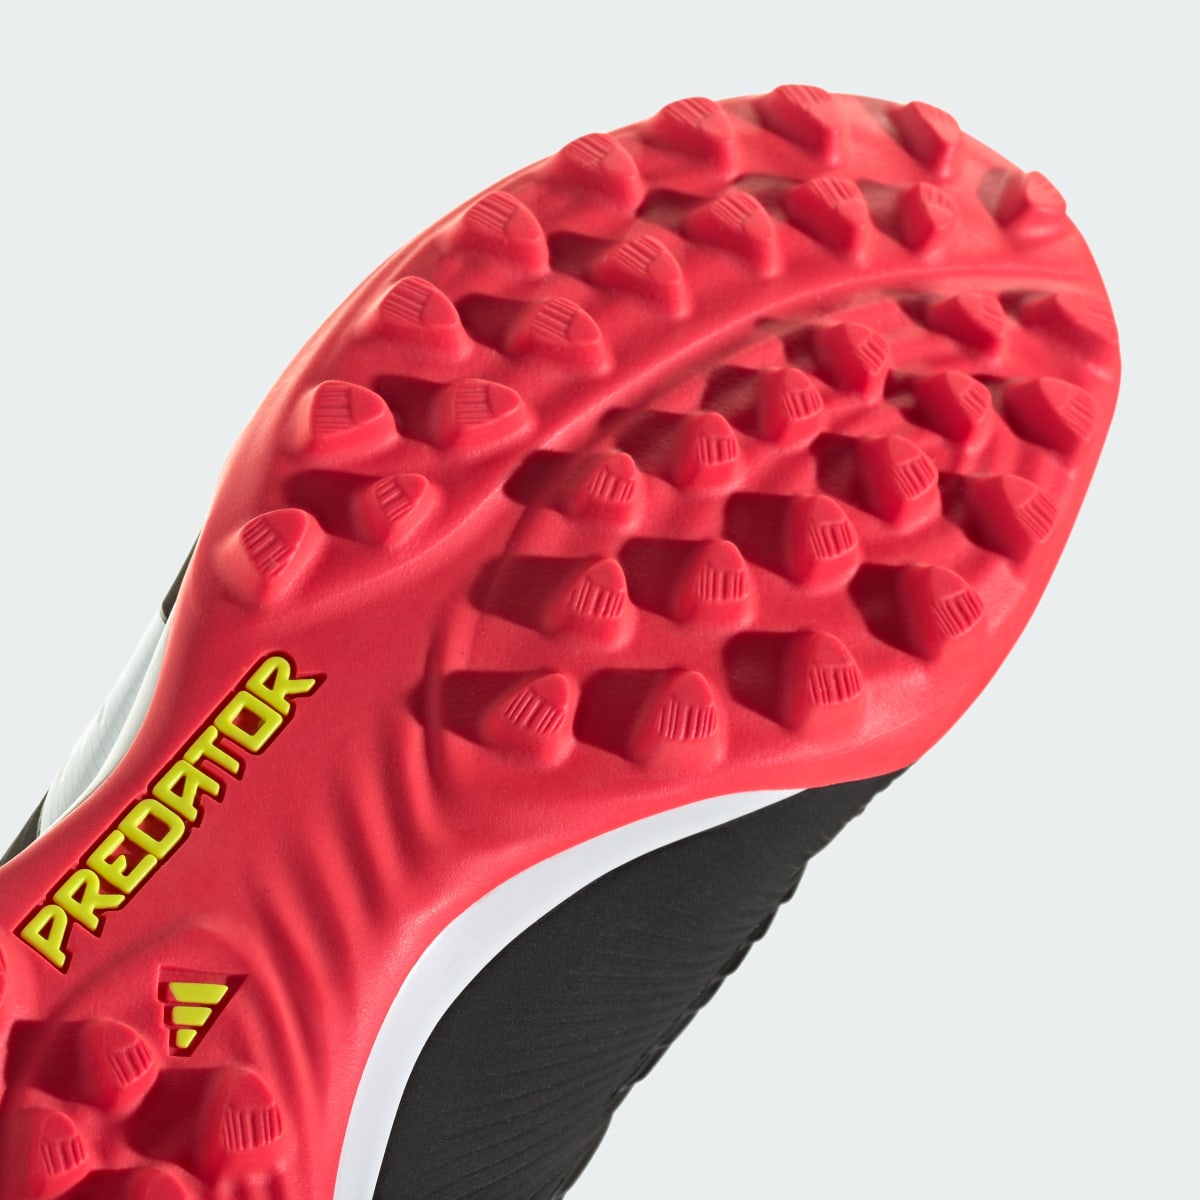 Adidas Predator Elite Turf Football Boots. 4